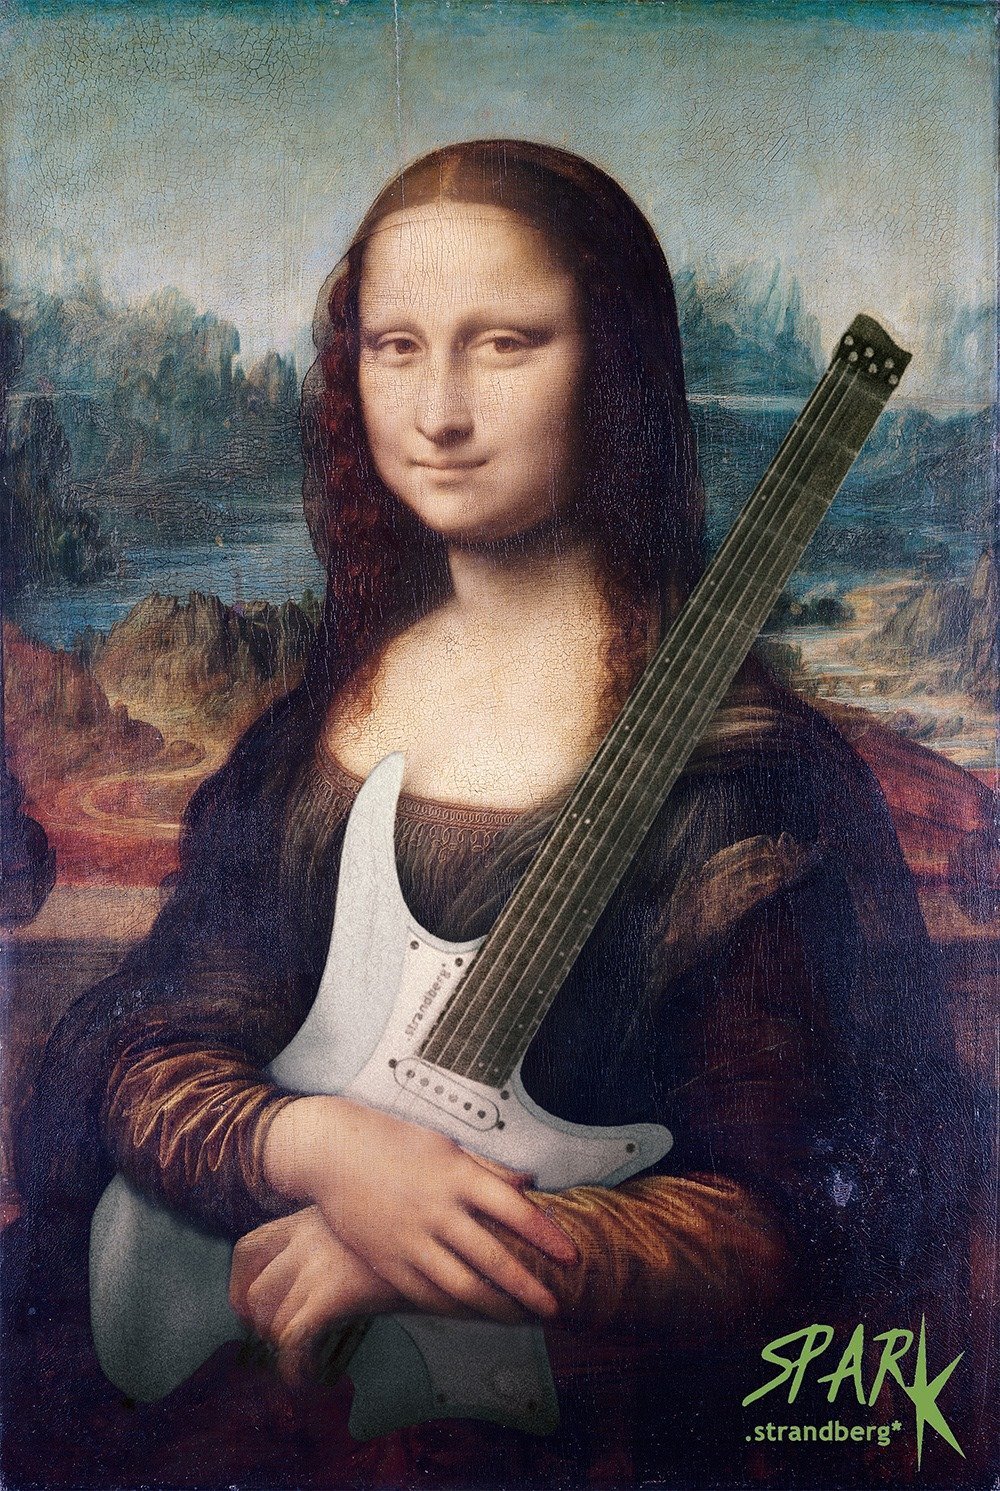 Mona Lisa holding a headless strandberg guitar